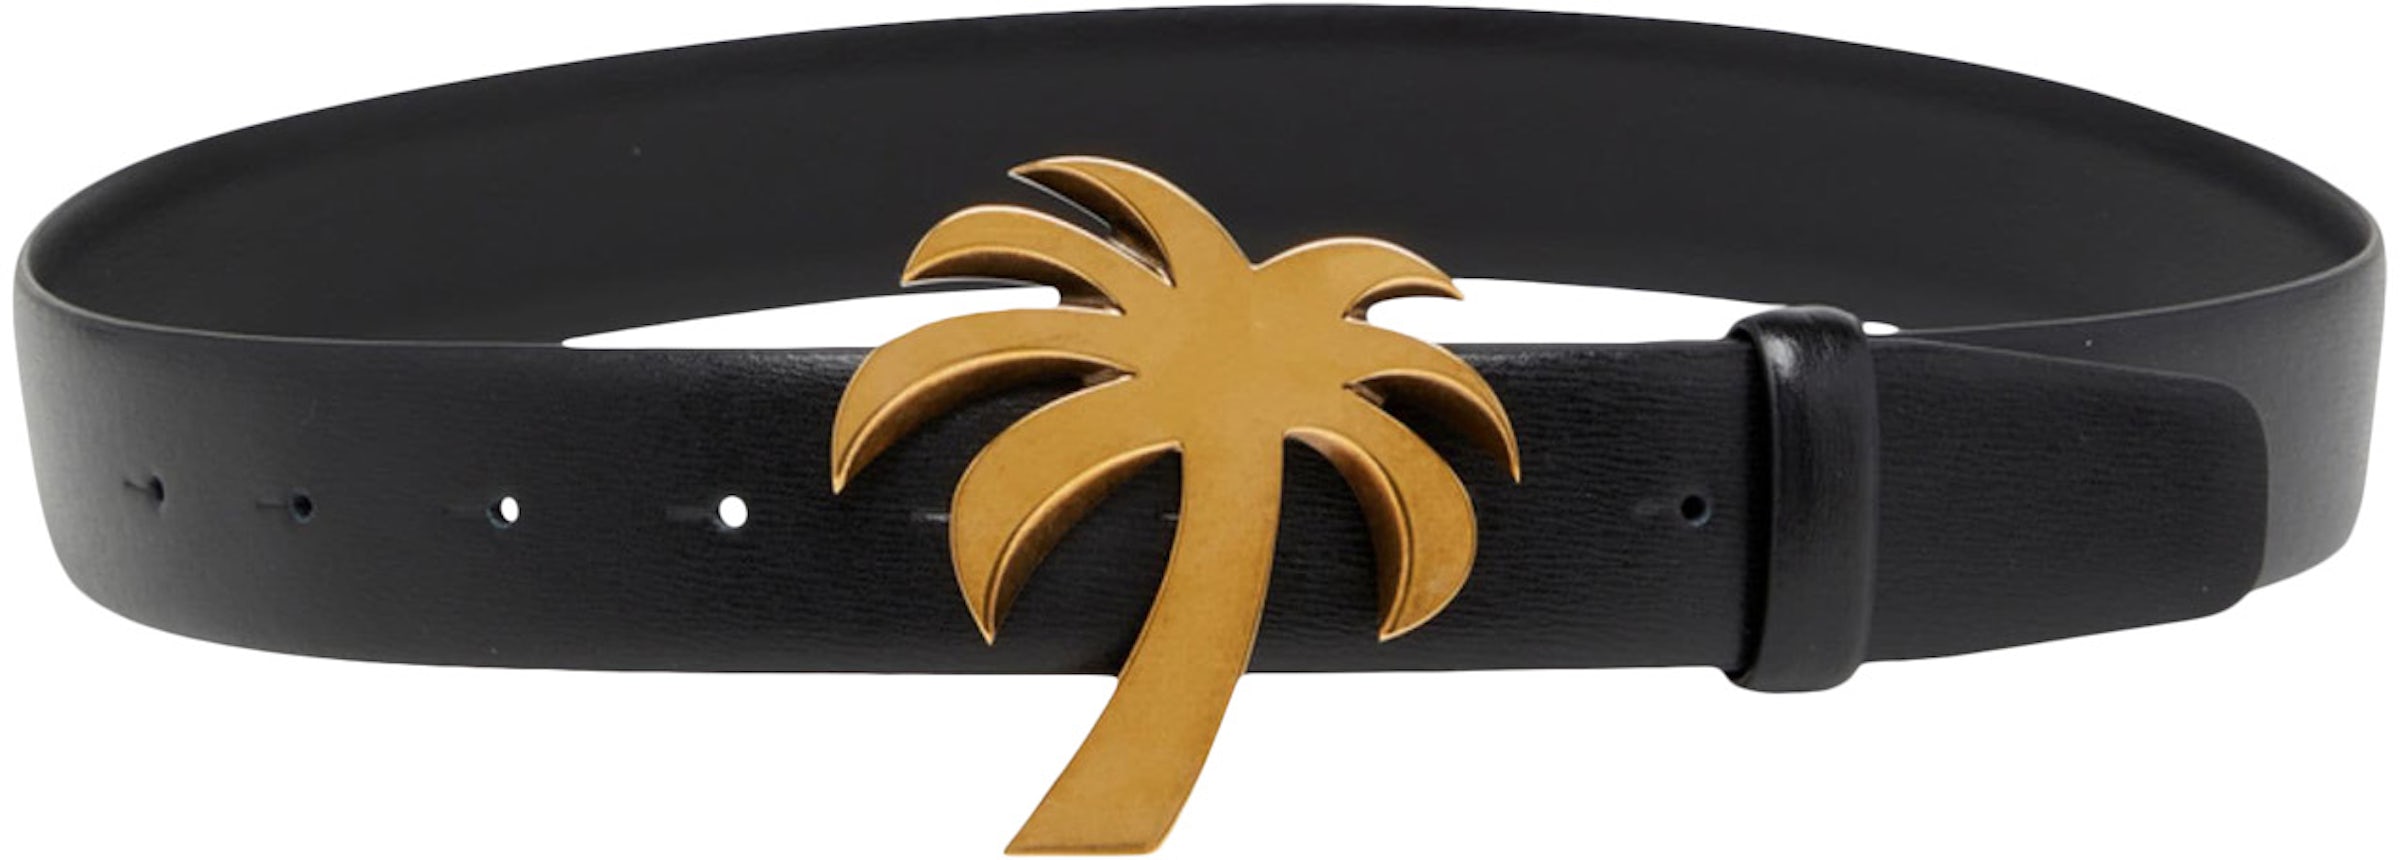 Palm Angels Palm Beach Zip Card Holder - Black – Kith